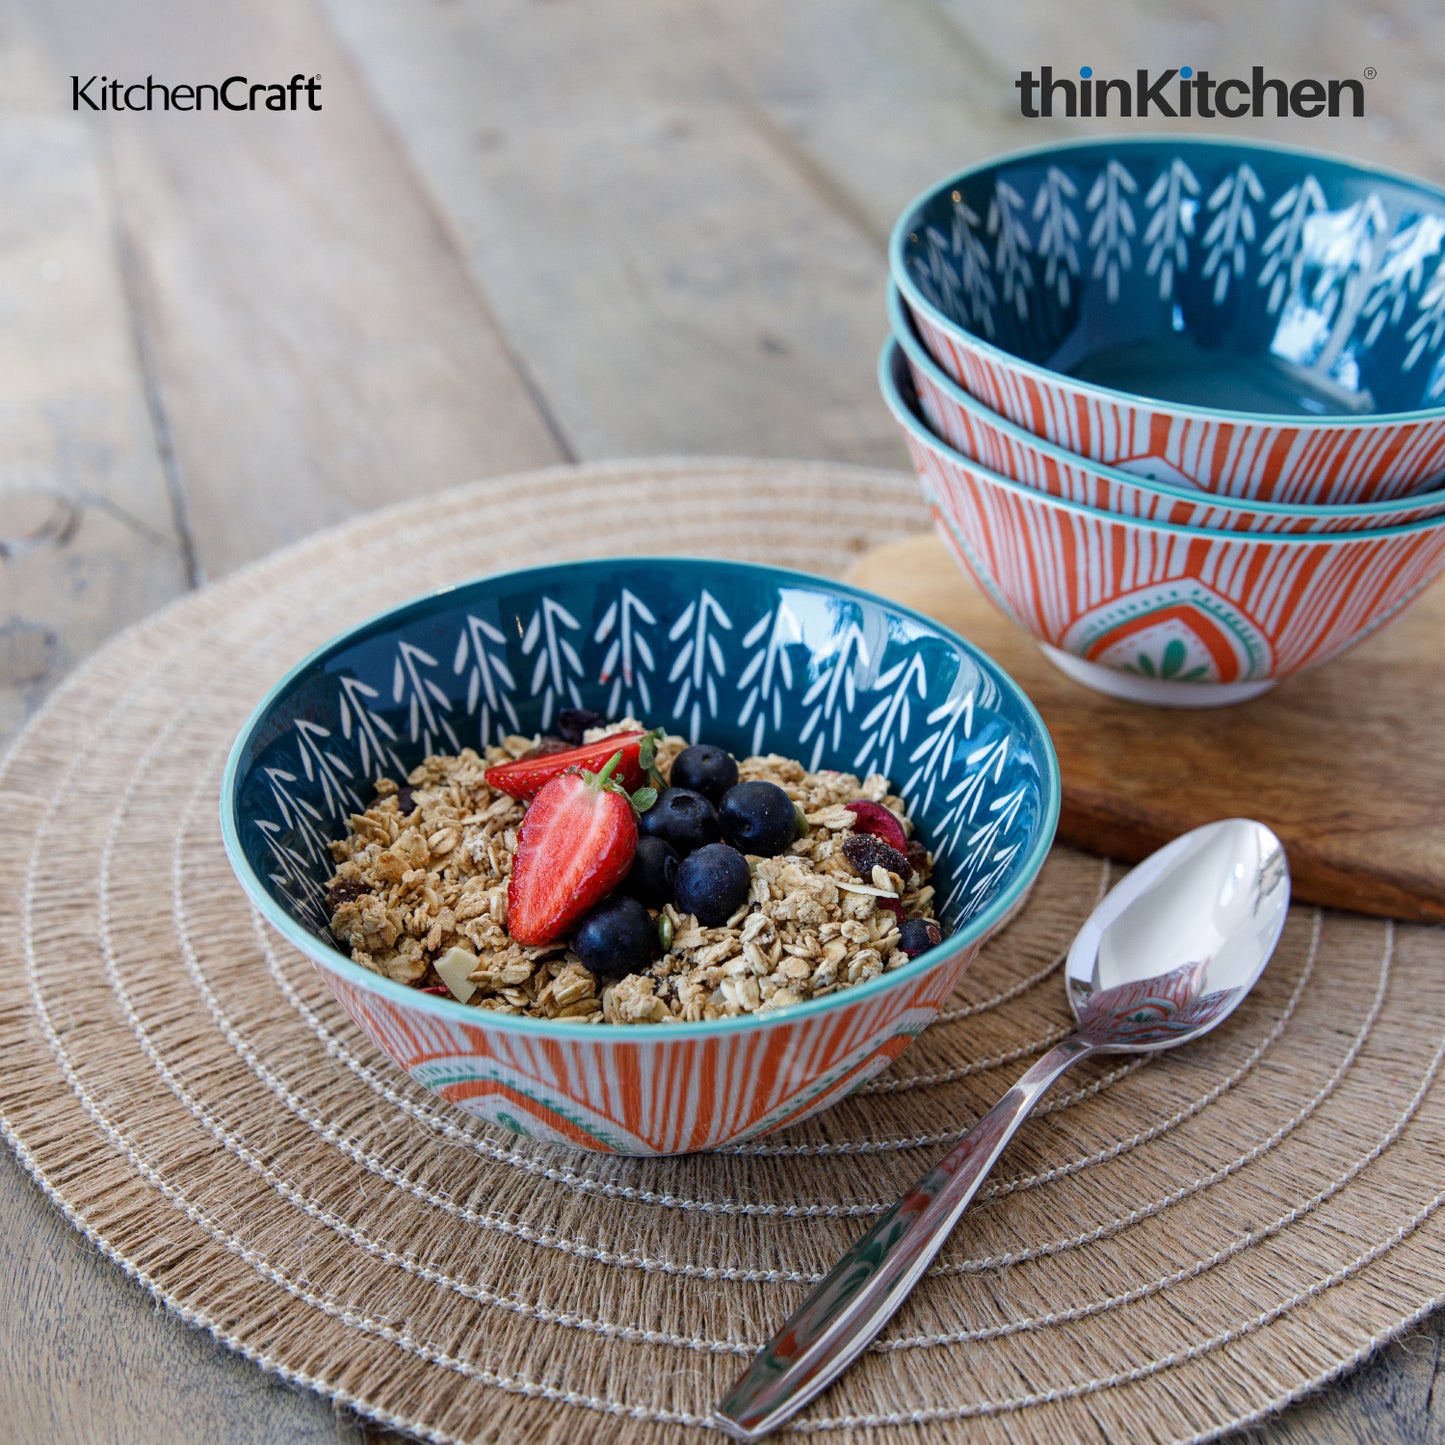 KitchenCraft Colourful Folk Pattern Ceramic Bowls, 480ml